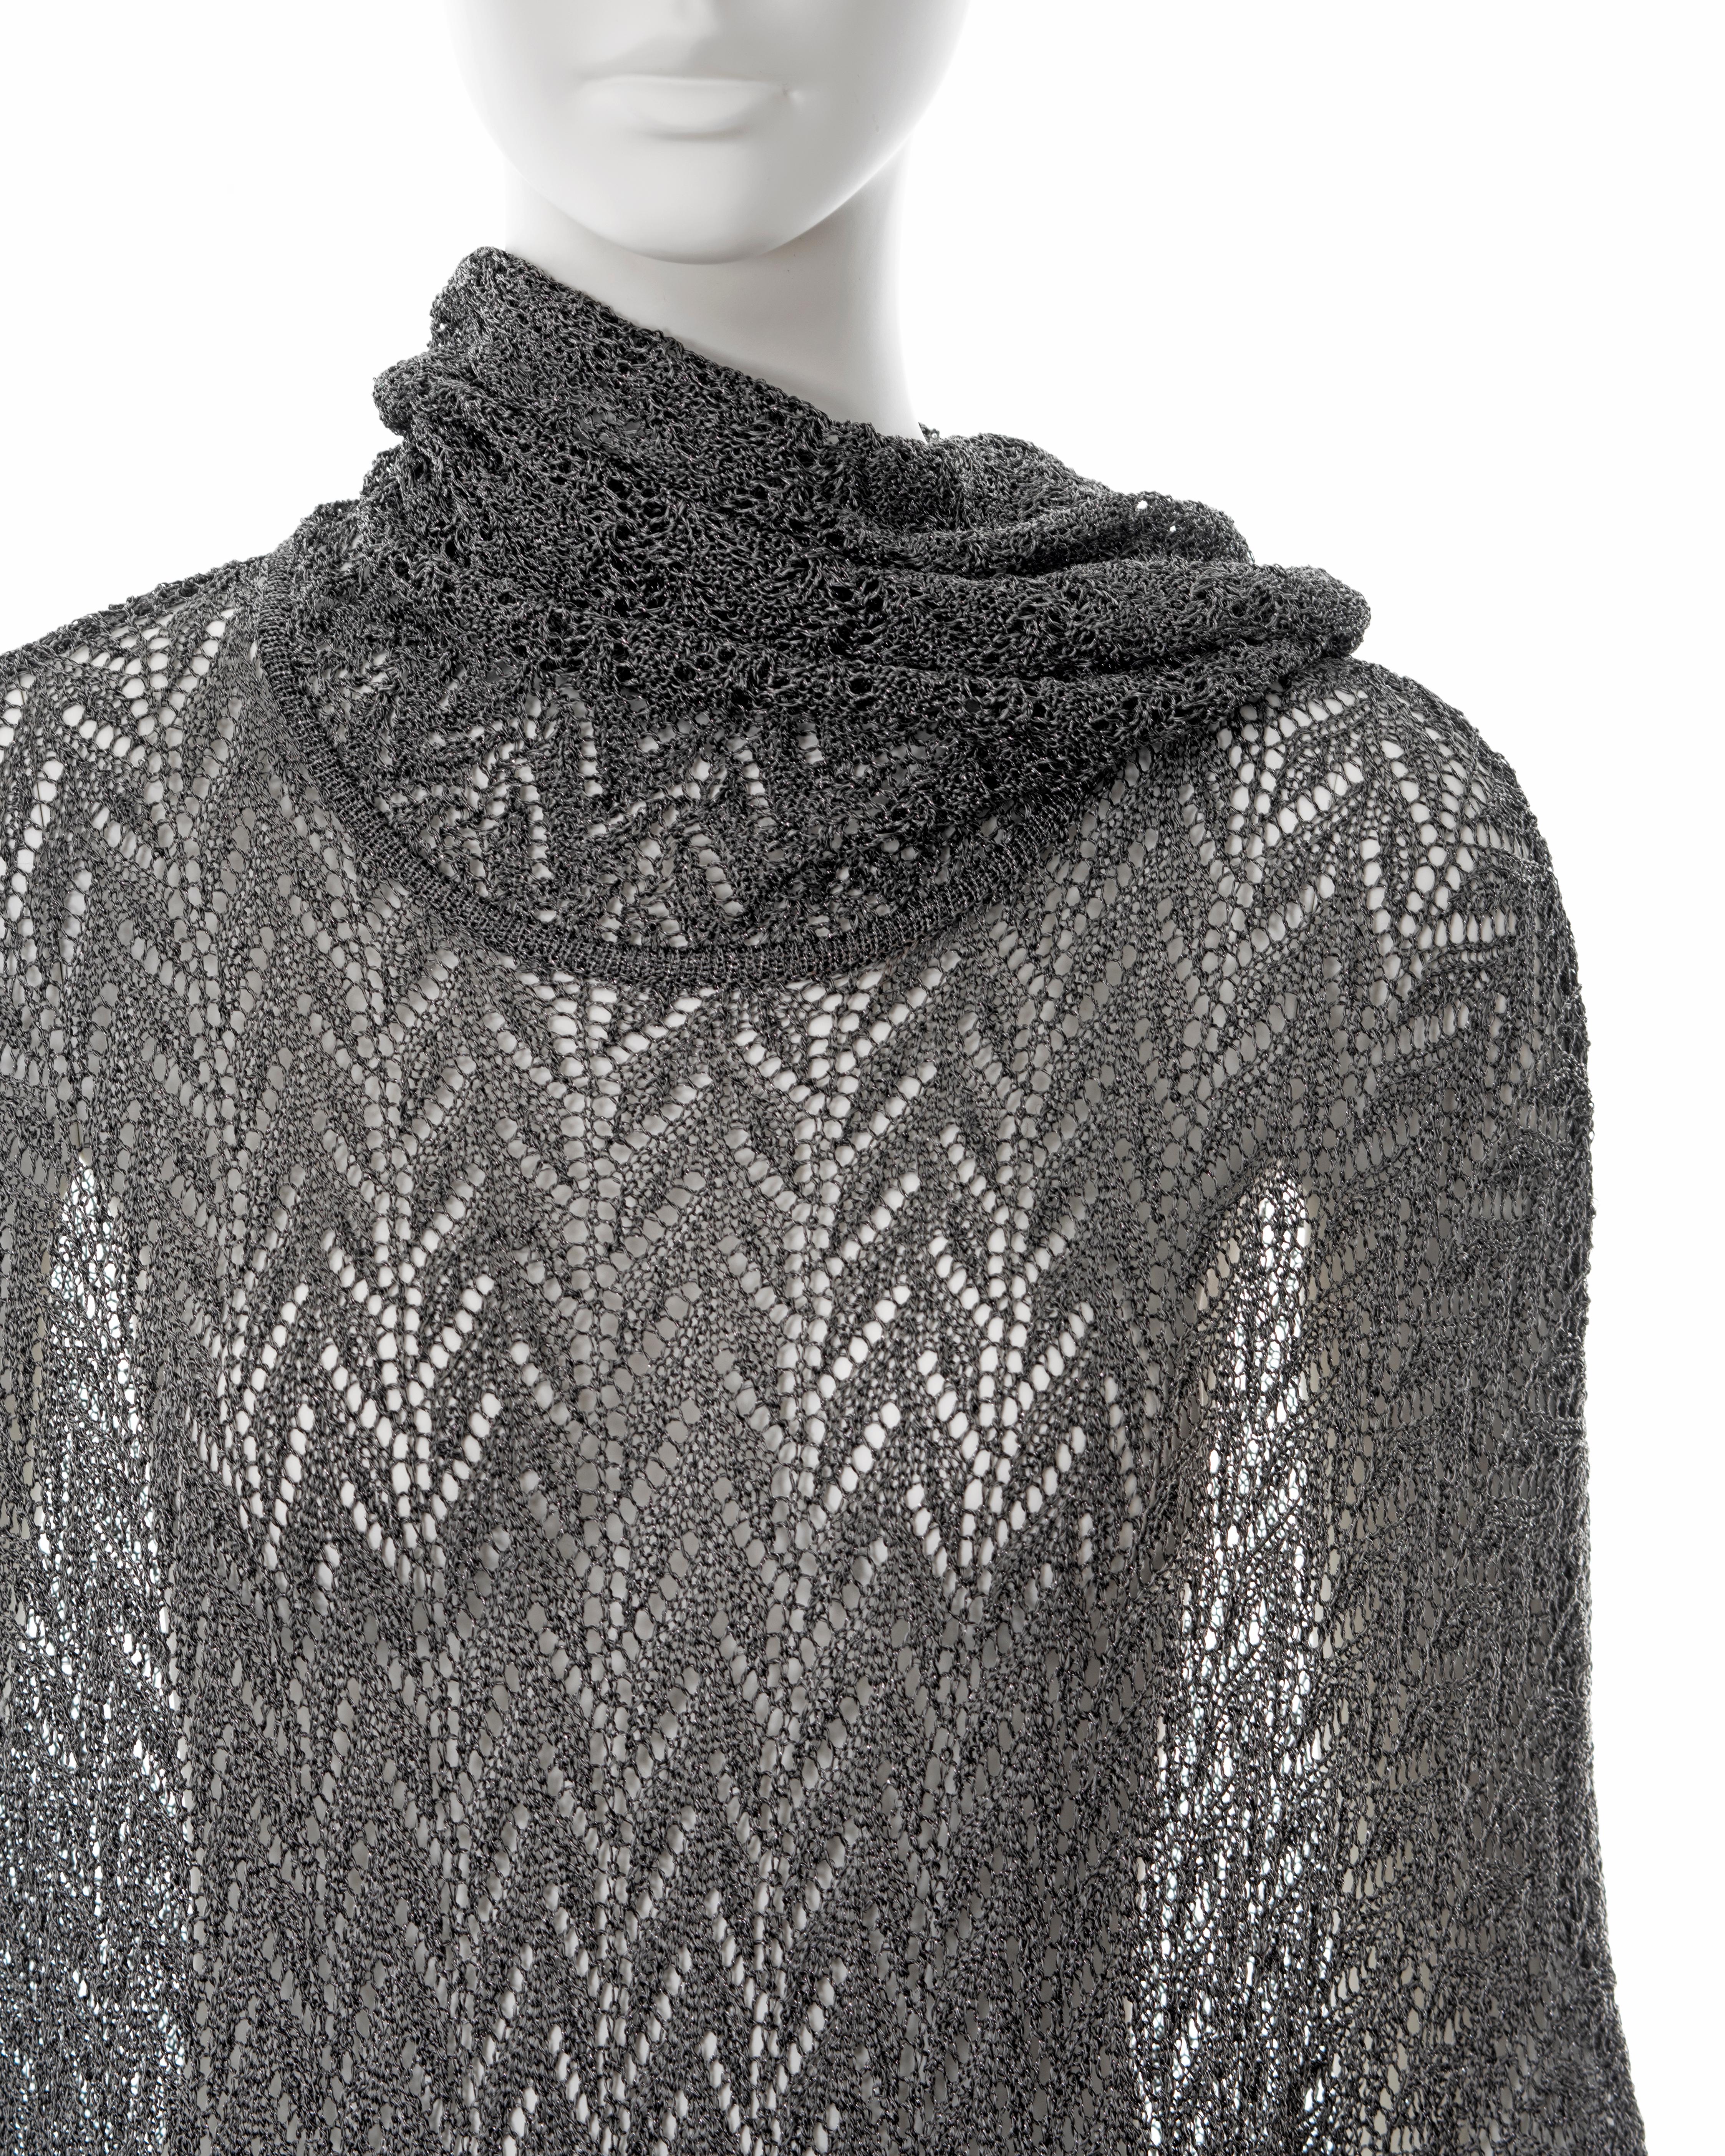 Women's Christian Dior by John Galliano silver crochet sweater dress, fw 1998 For Sale